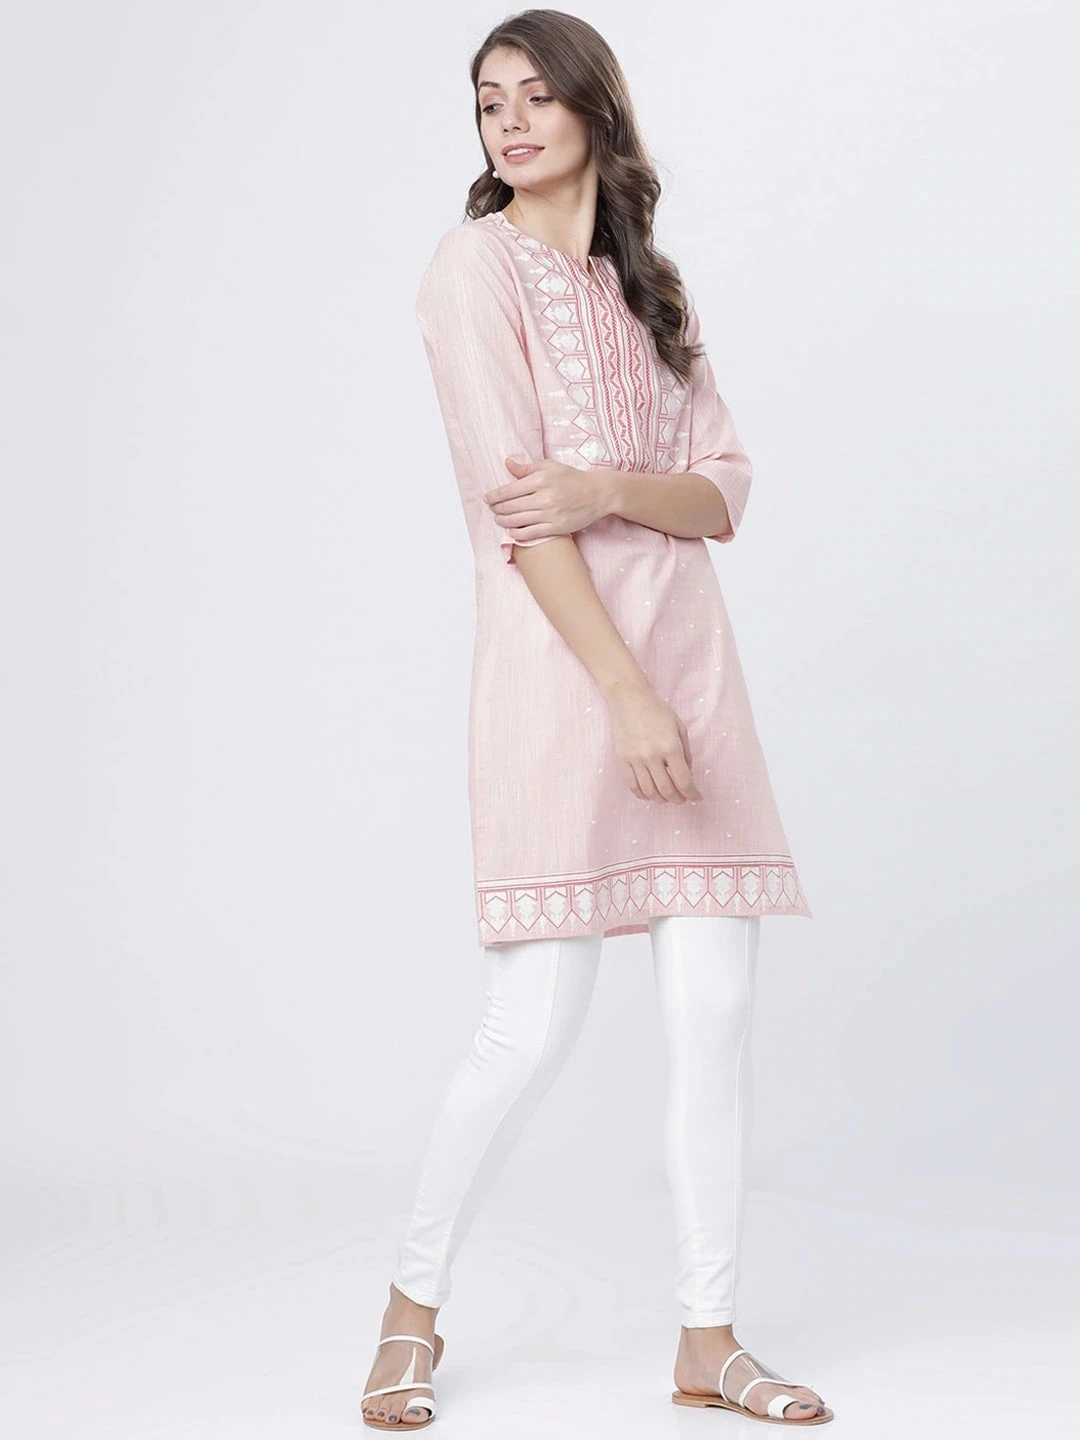 

India Pakistan Clothing For Women Indian Saree Blouse Shirt women Loose Casual Short Sleeve Boho Ethnic Long Robe Tops Clothes